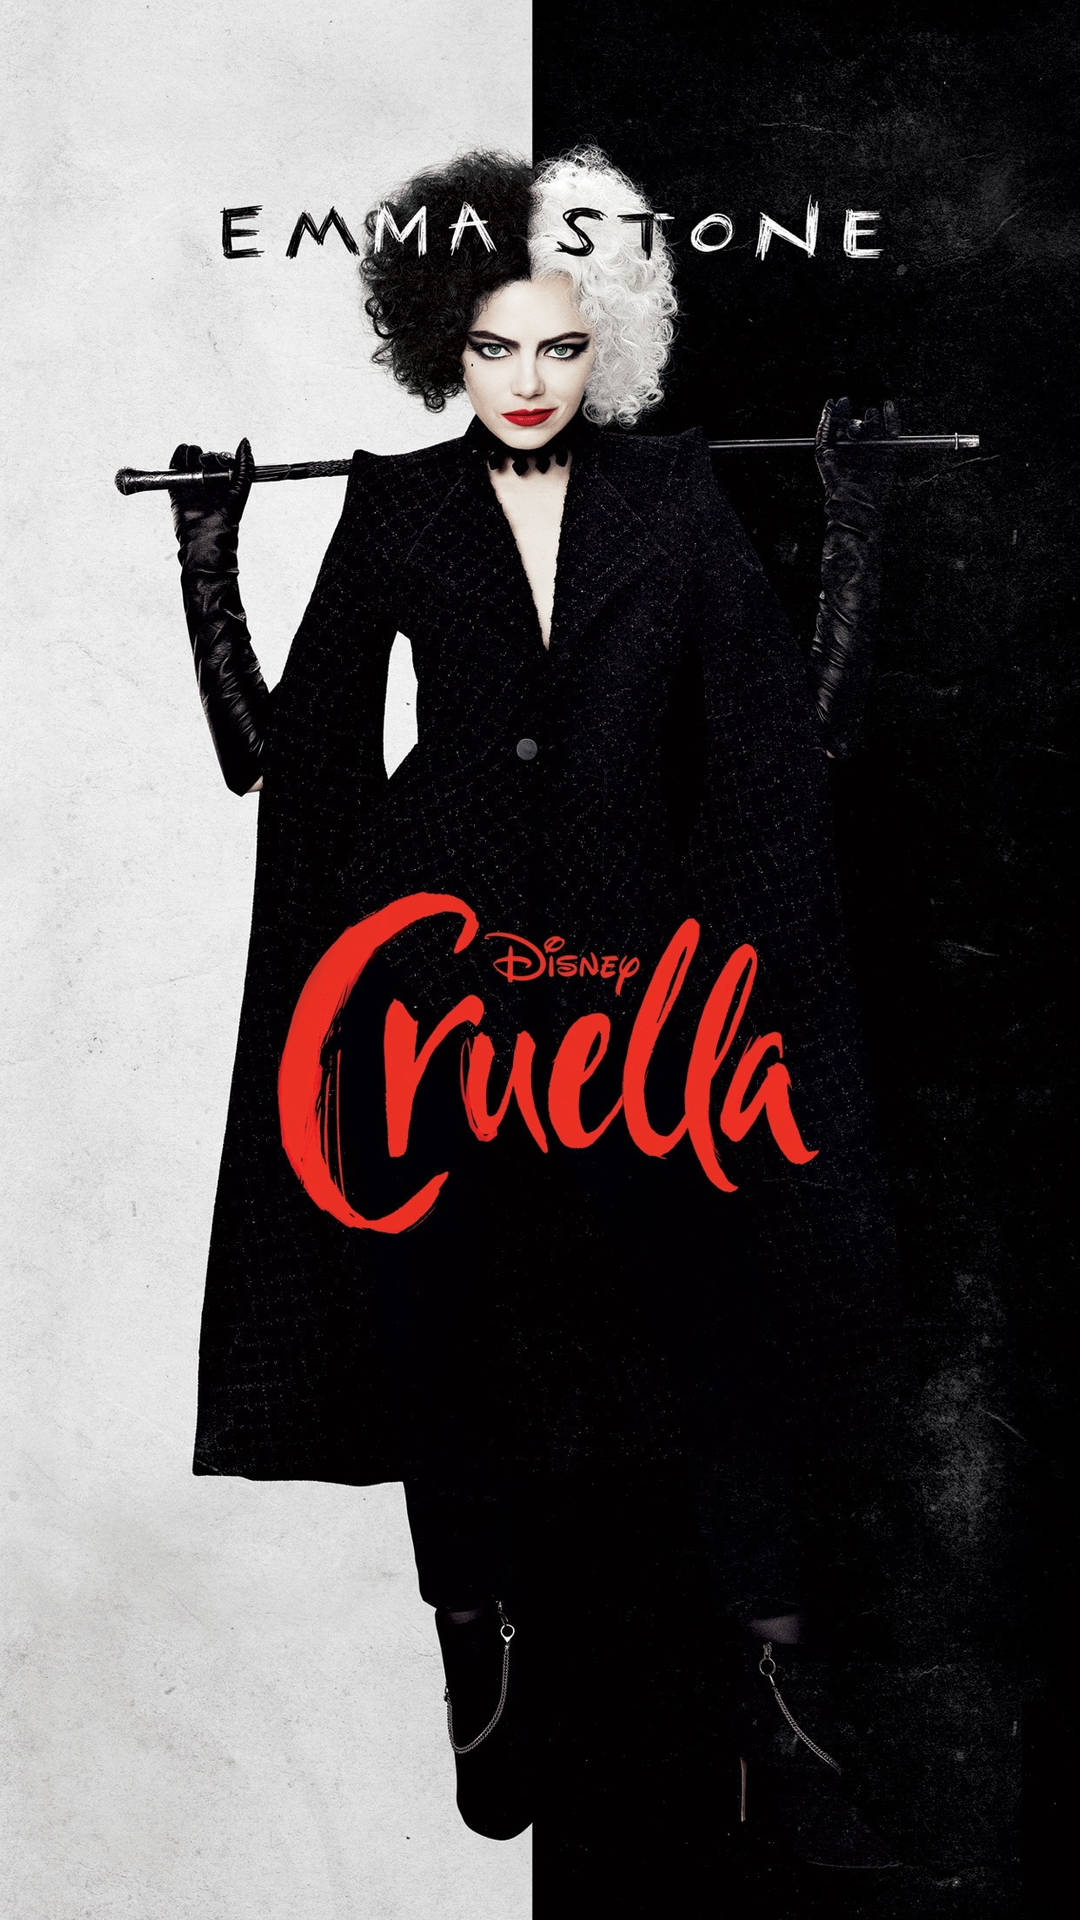 Empowered And Enigmatic - Emma Stone As Cruella Background